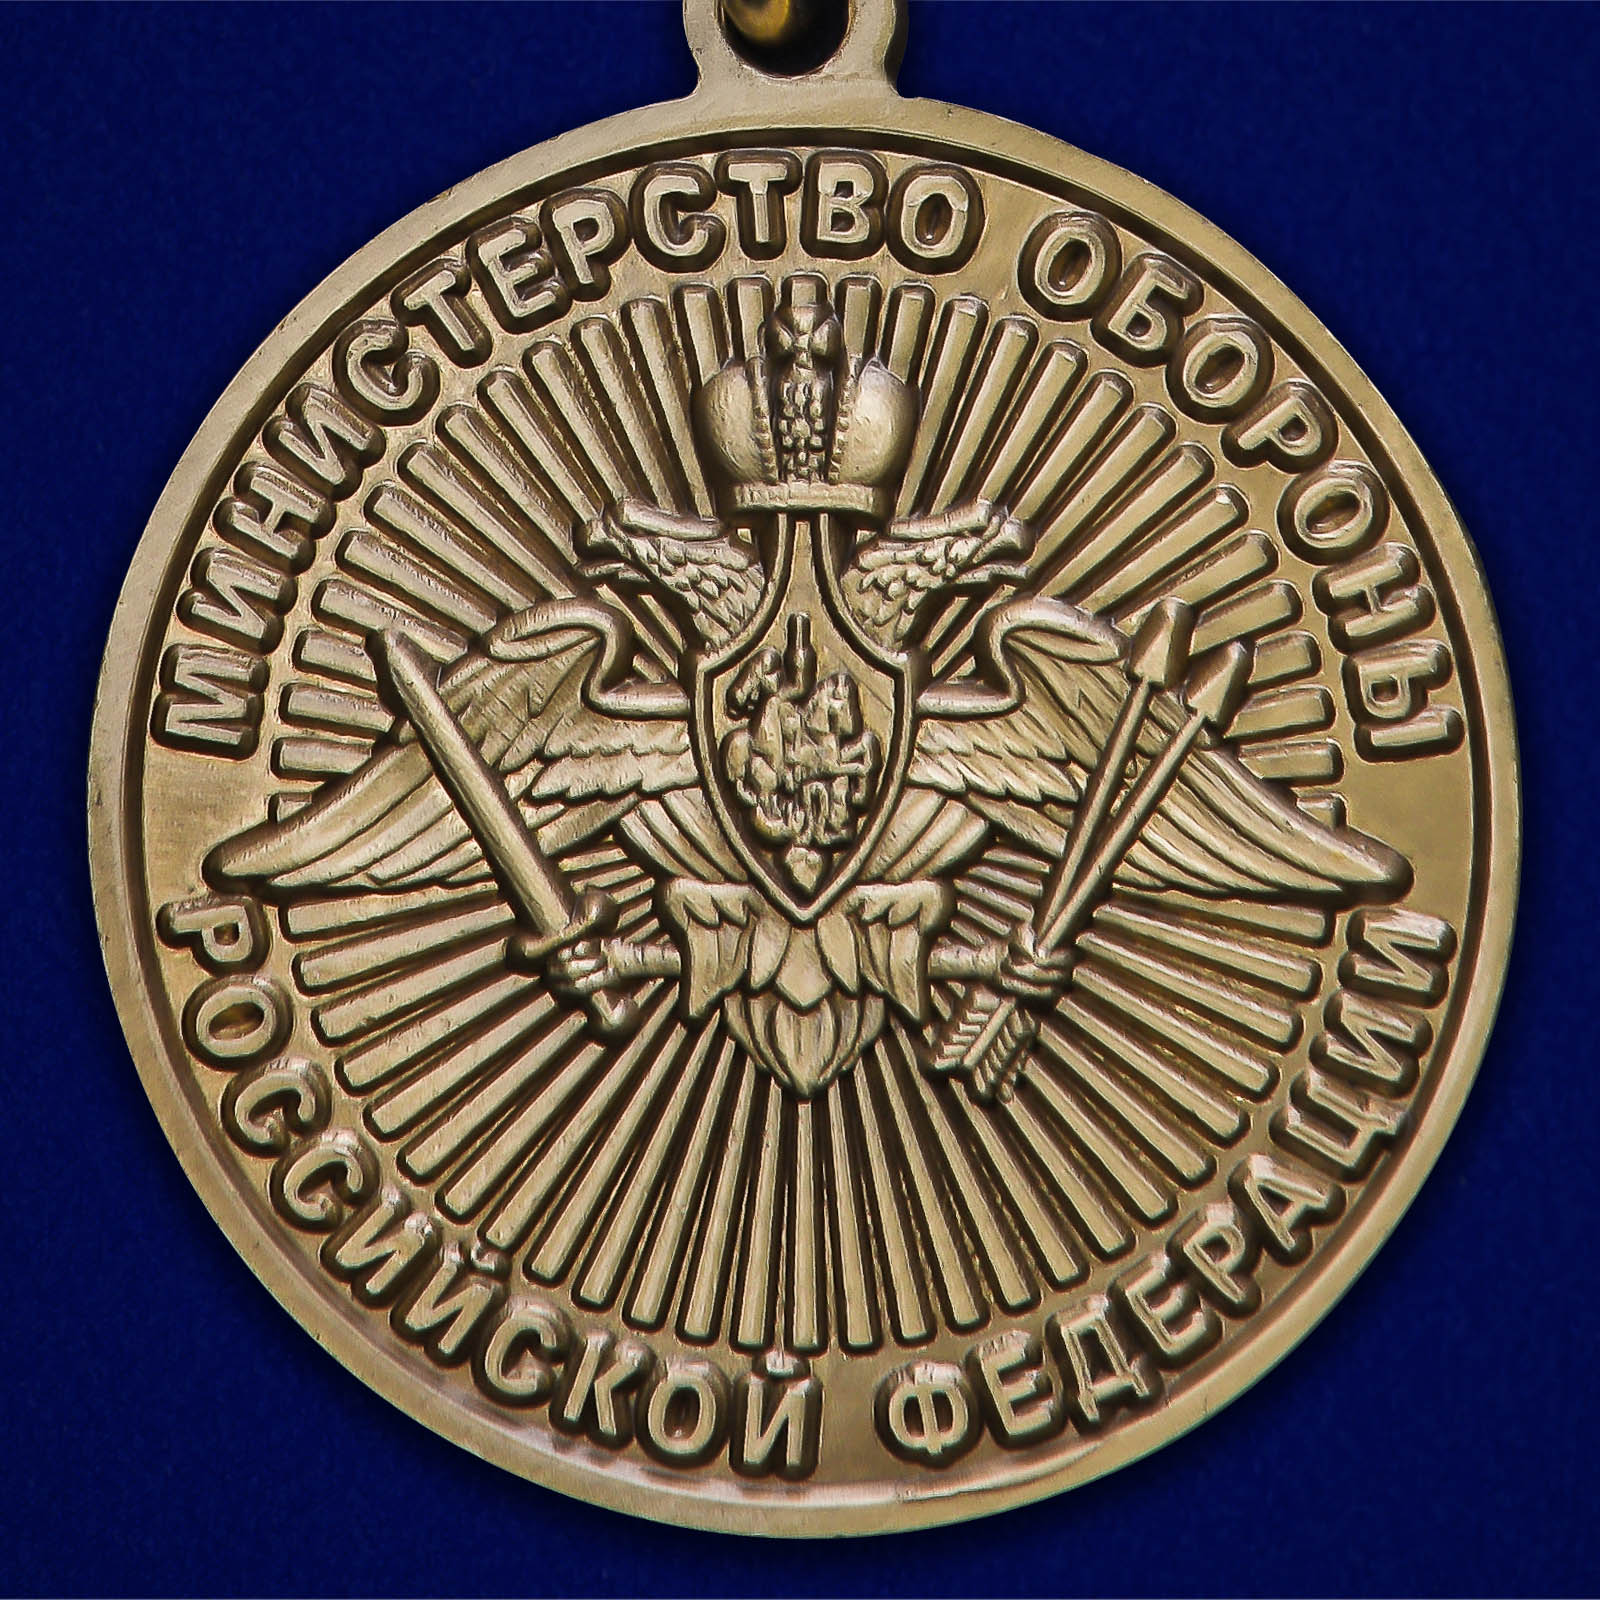 Наградная медаль "За службу в спецназе РВСН" 